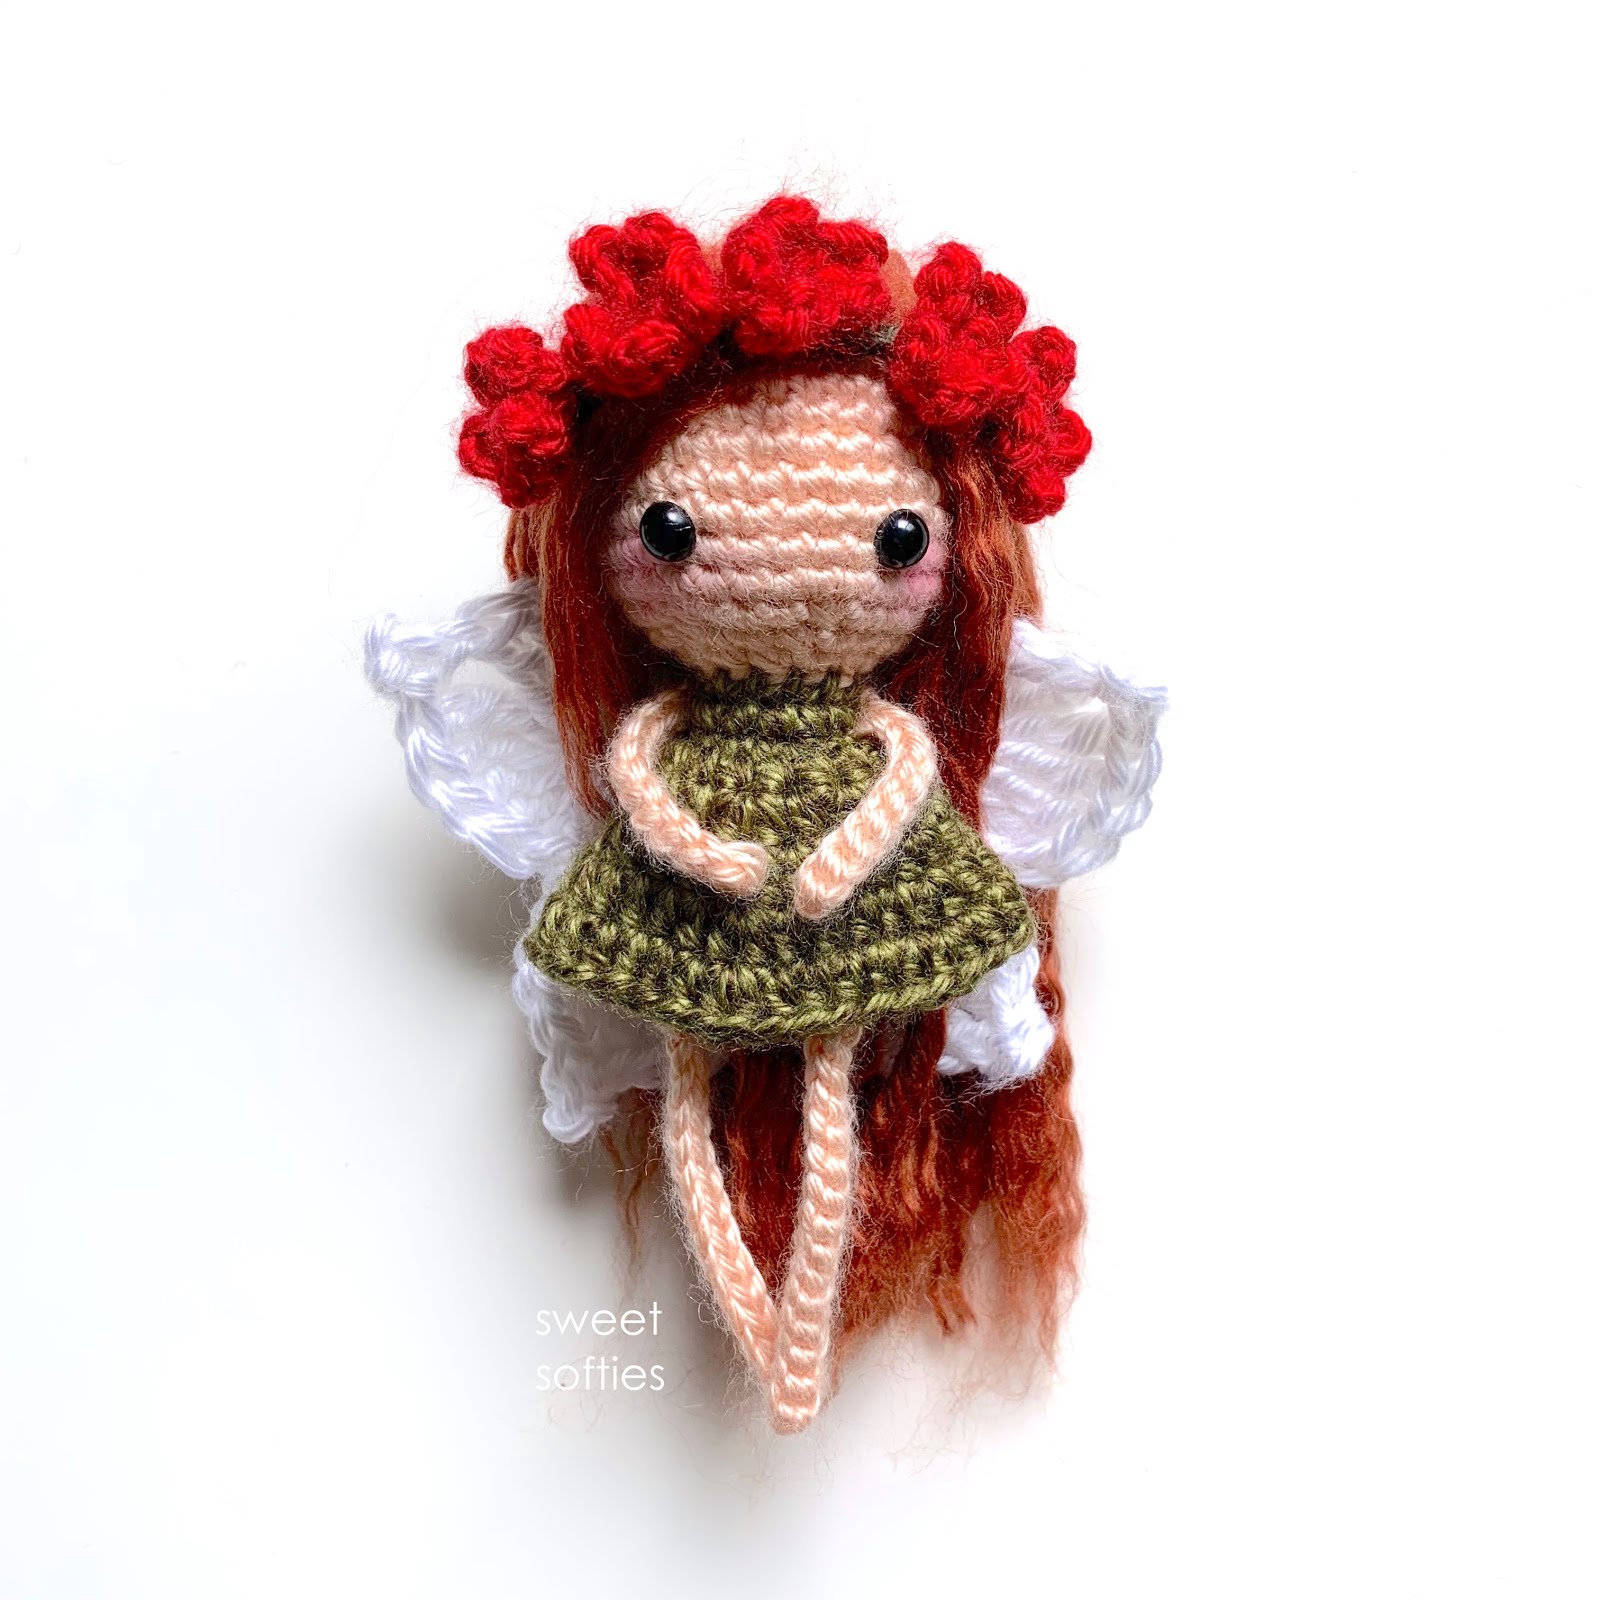 Amigurumi Christmas Fairy Free Crochet Pattern - Amigurumi